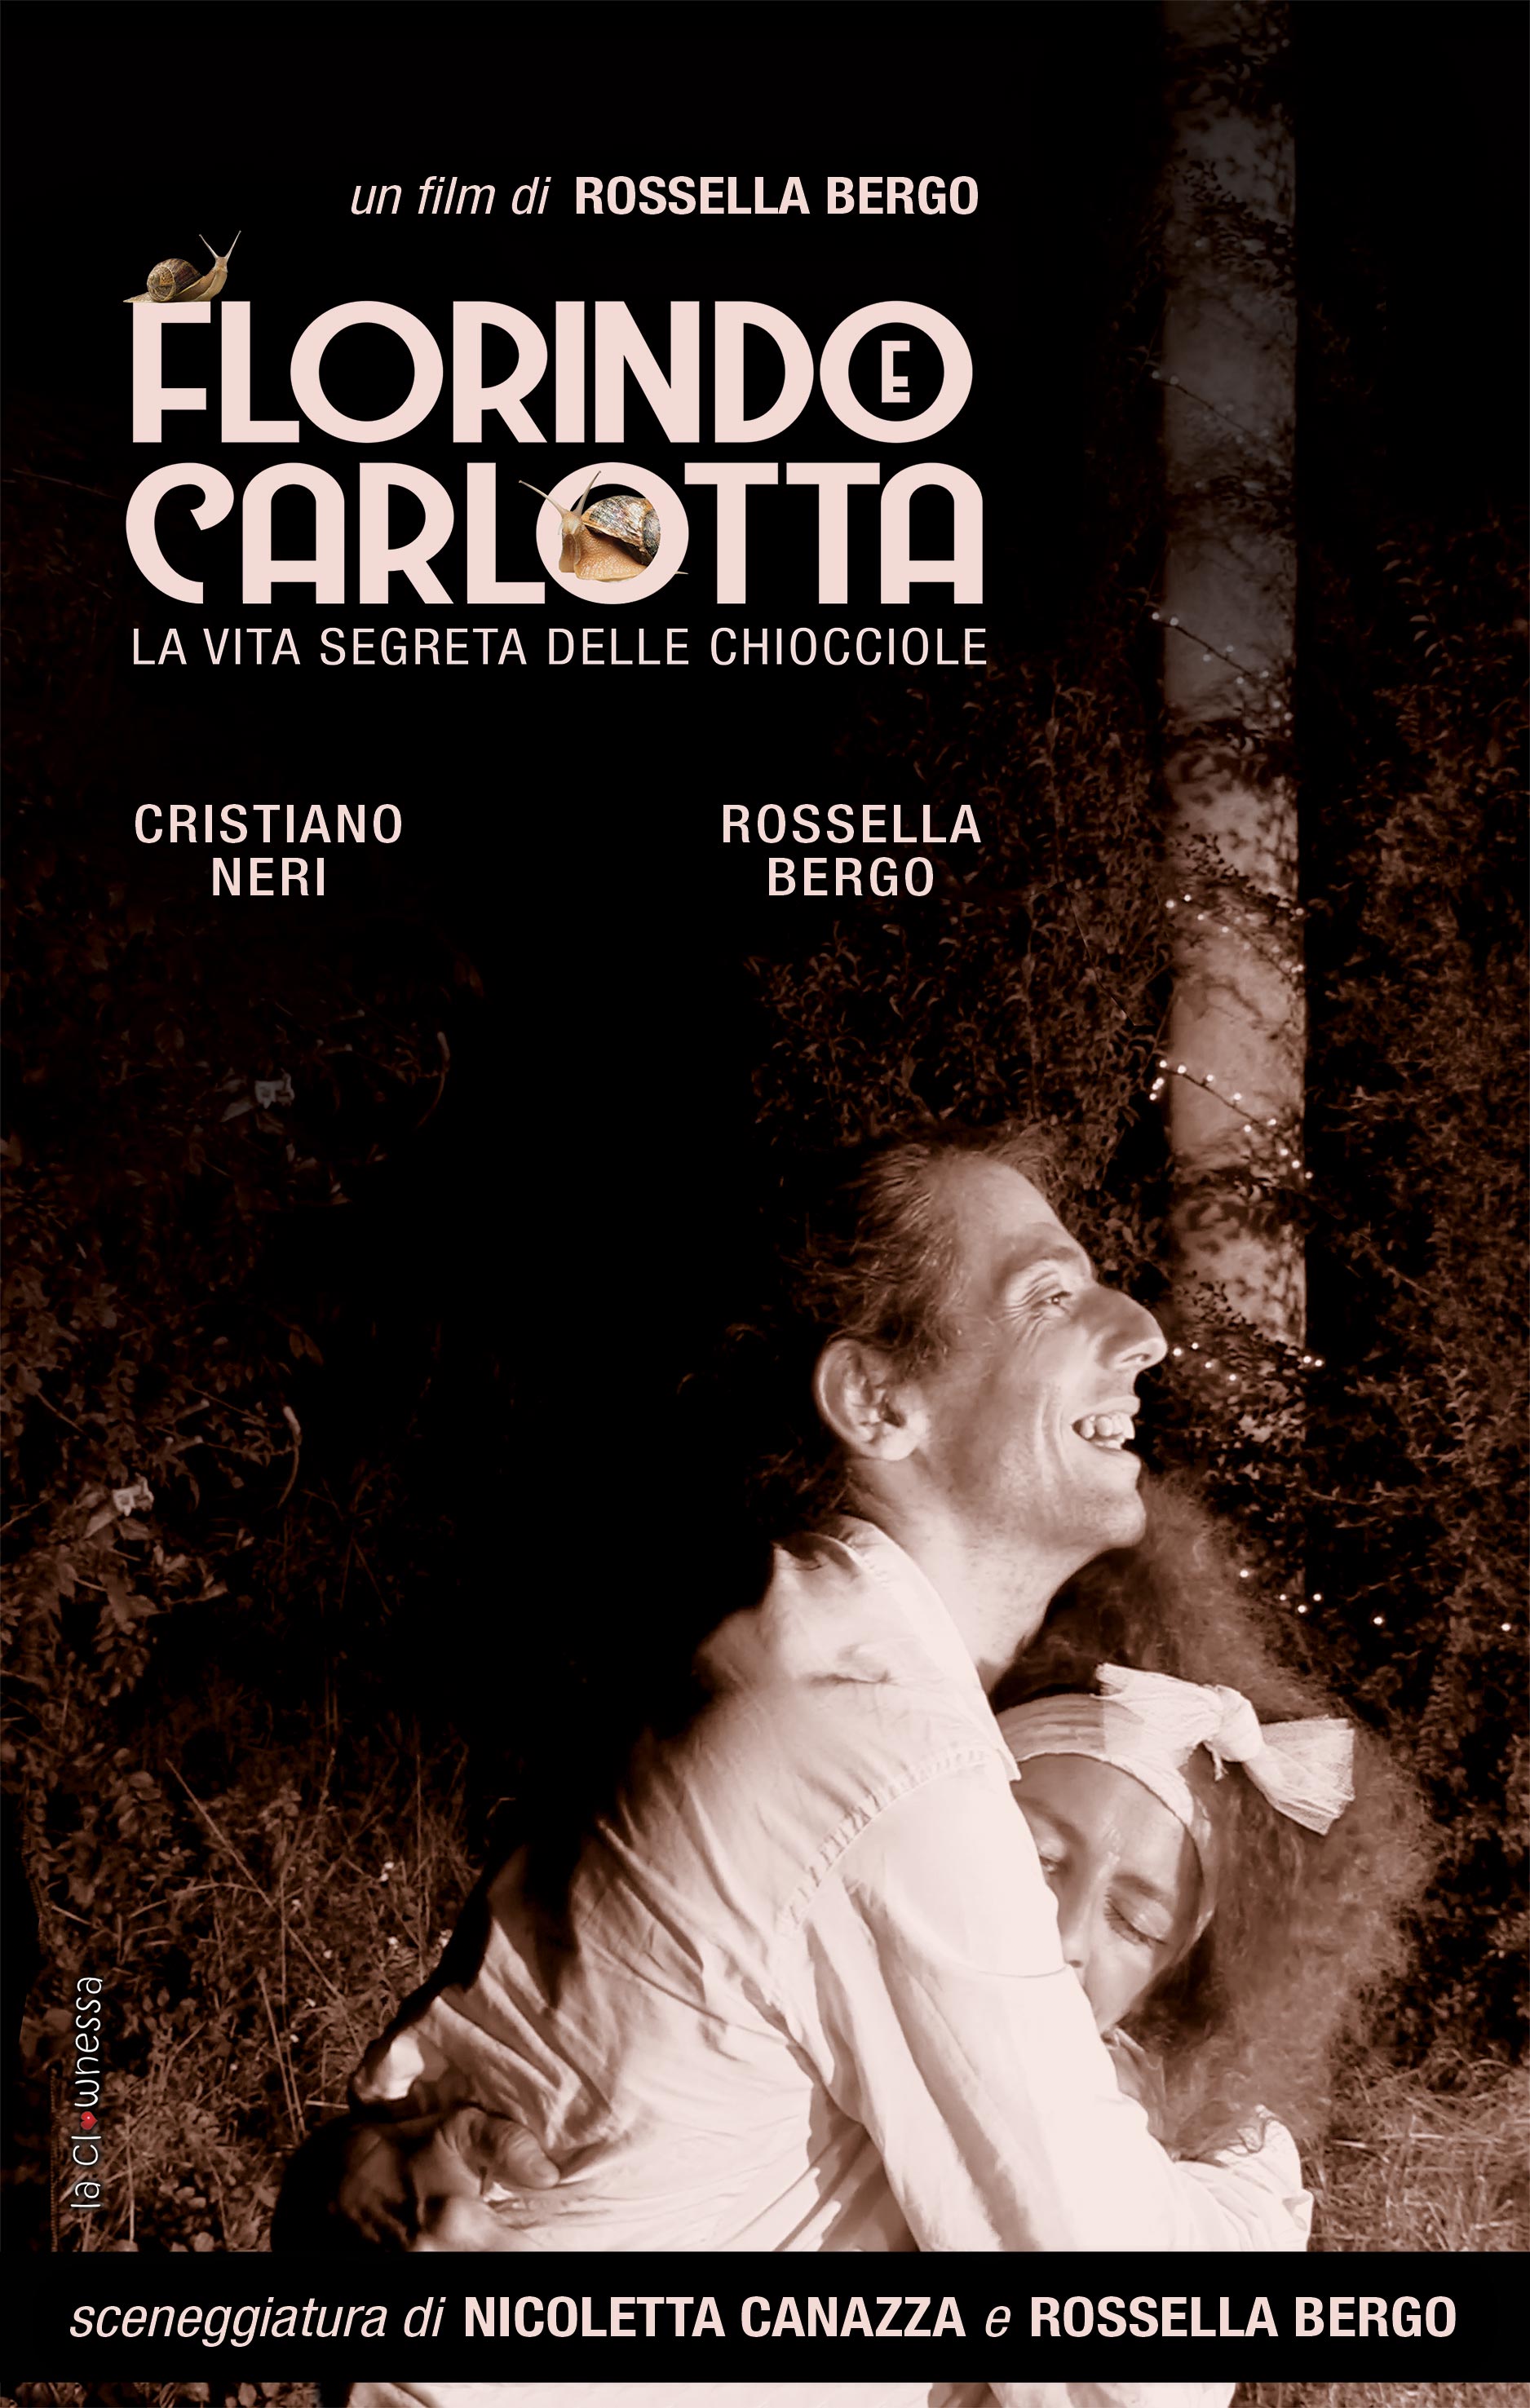 Florindo & Carlotta from Rosella Bergo